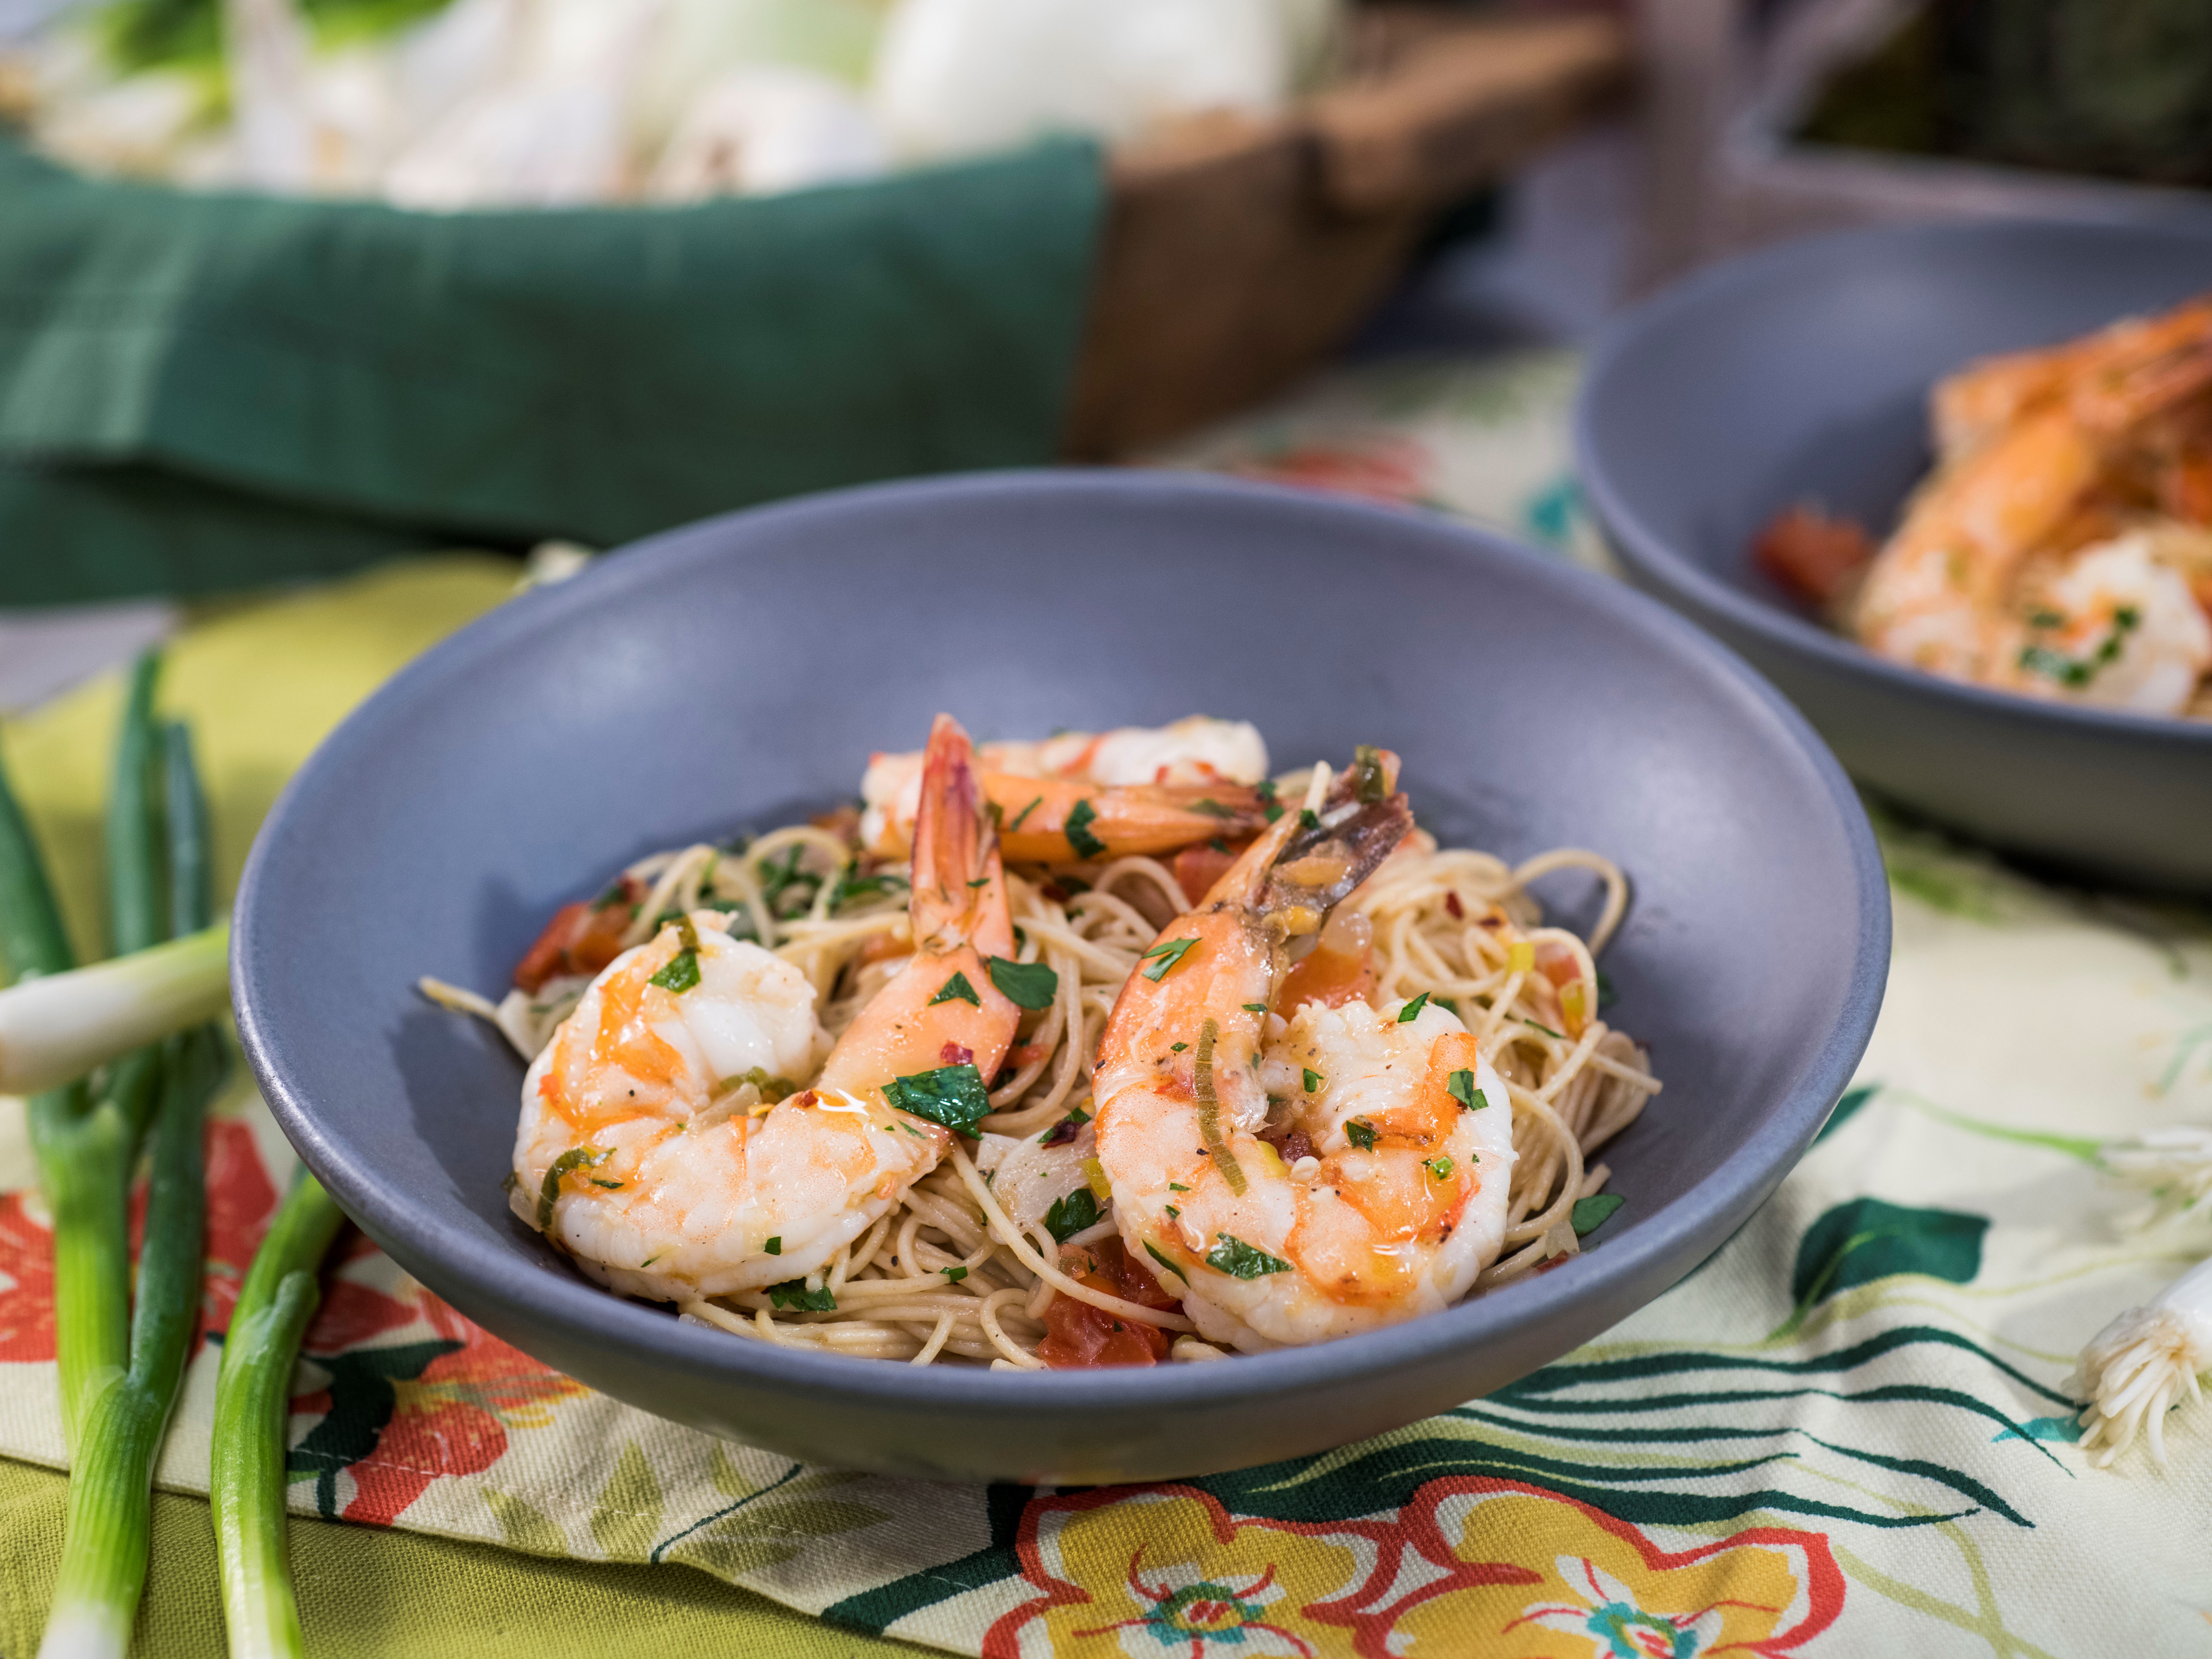 https://www.foodnetwork.com/content/dam/images/food/fullset/2019/3/27/KC2013_Quick-Onion-and-Garlic-Shrimp-Pasta_s4x3.jpg